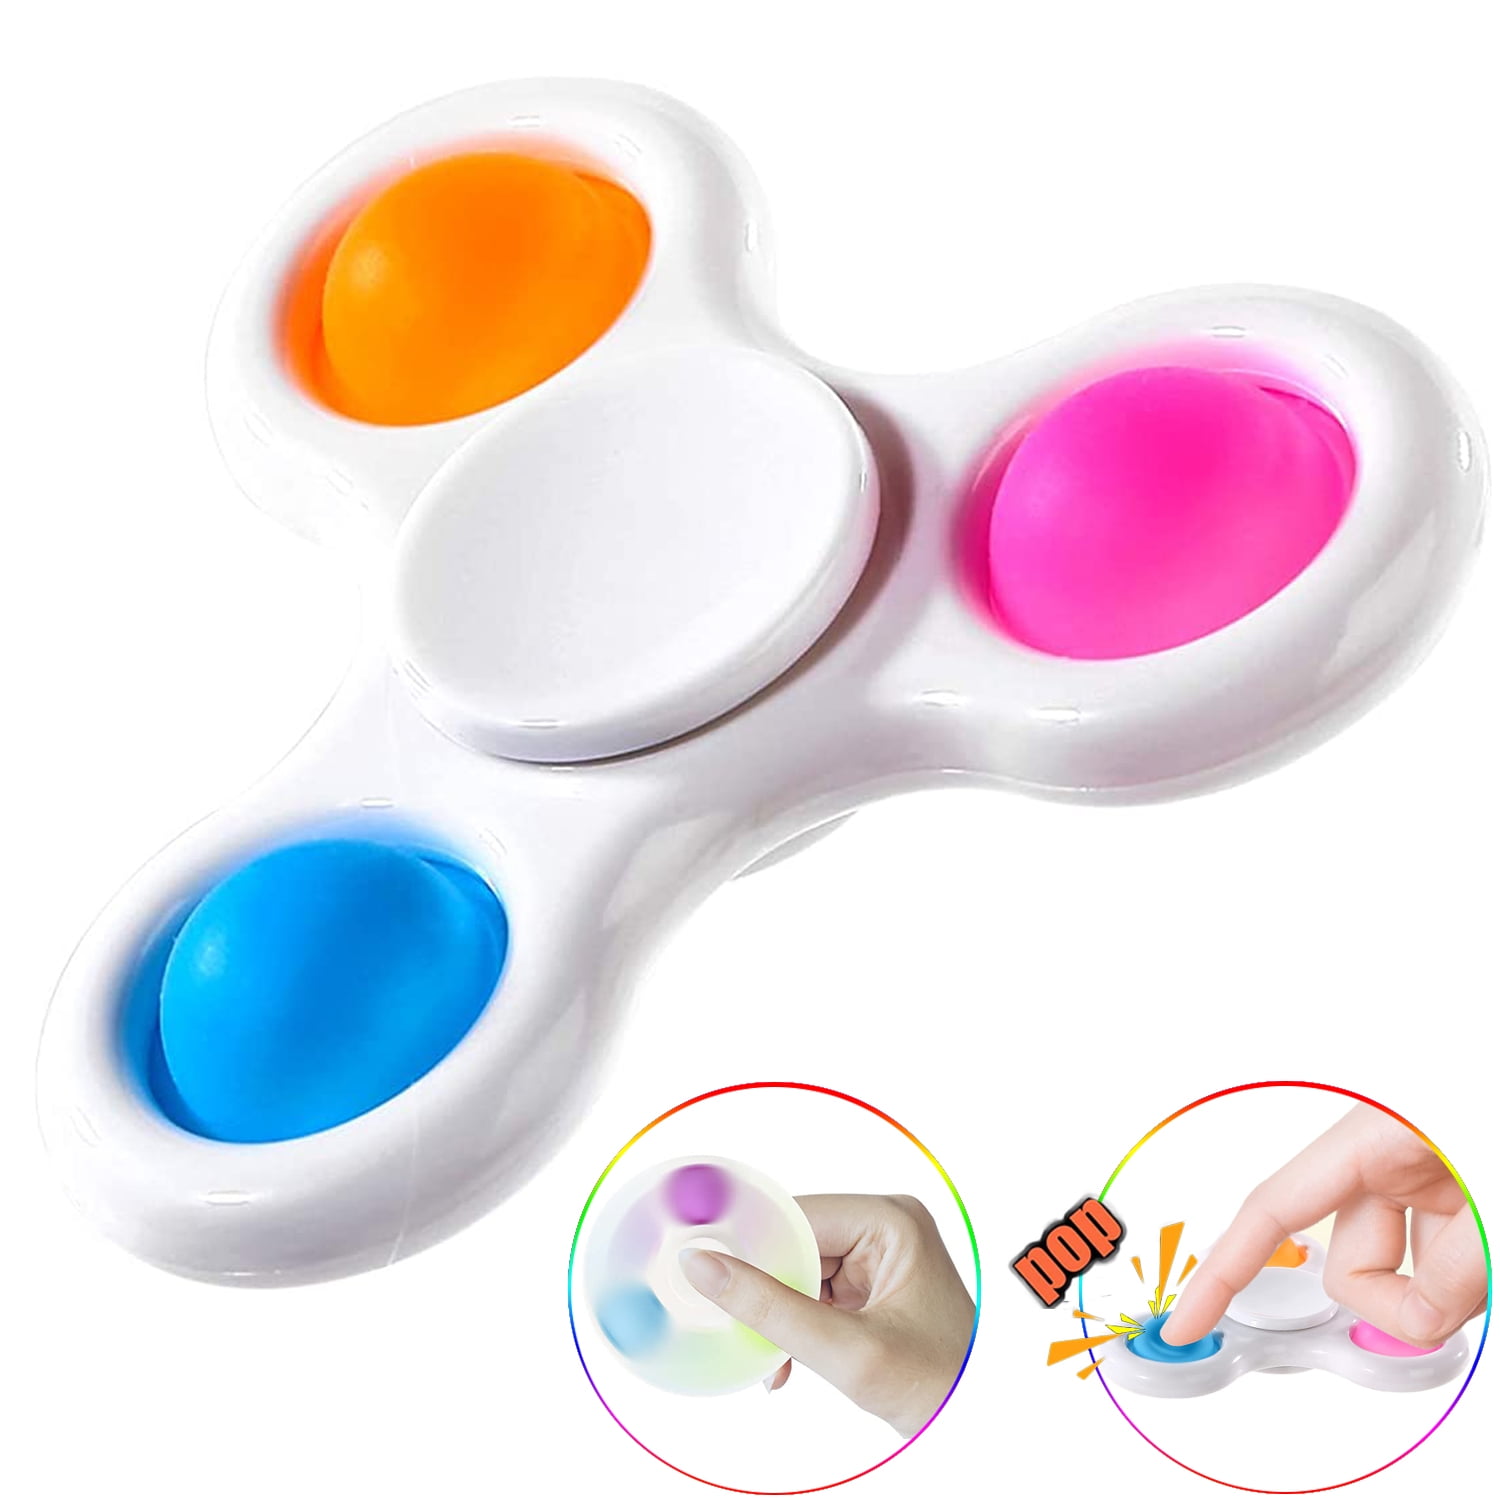 Multicolored 2 SCIONE Pop its Fidget Toys 5 Pcs,Pop its Fidget Spinners,Simple Dimple Fidget Toy 